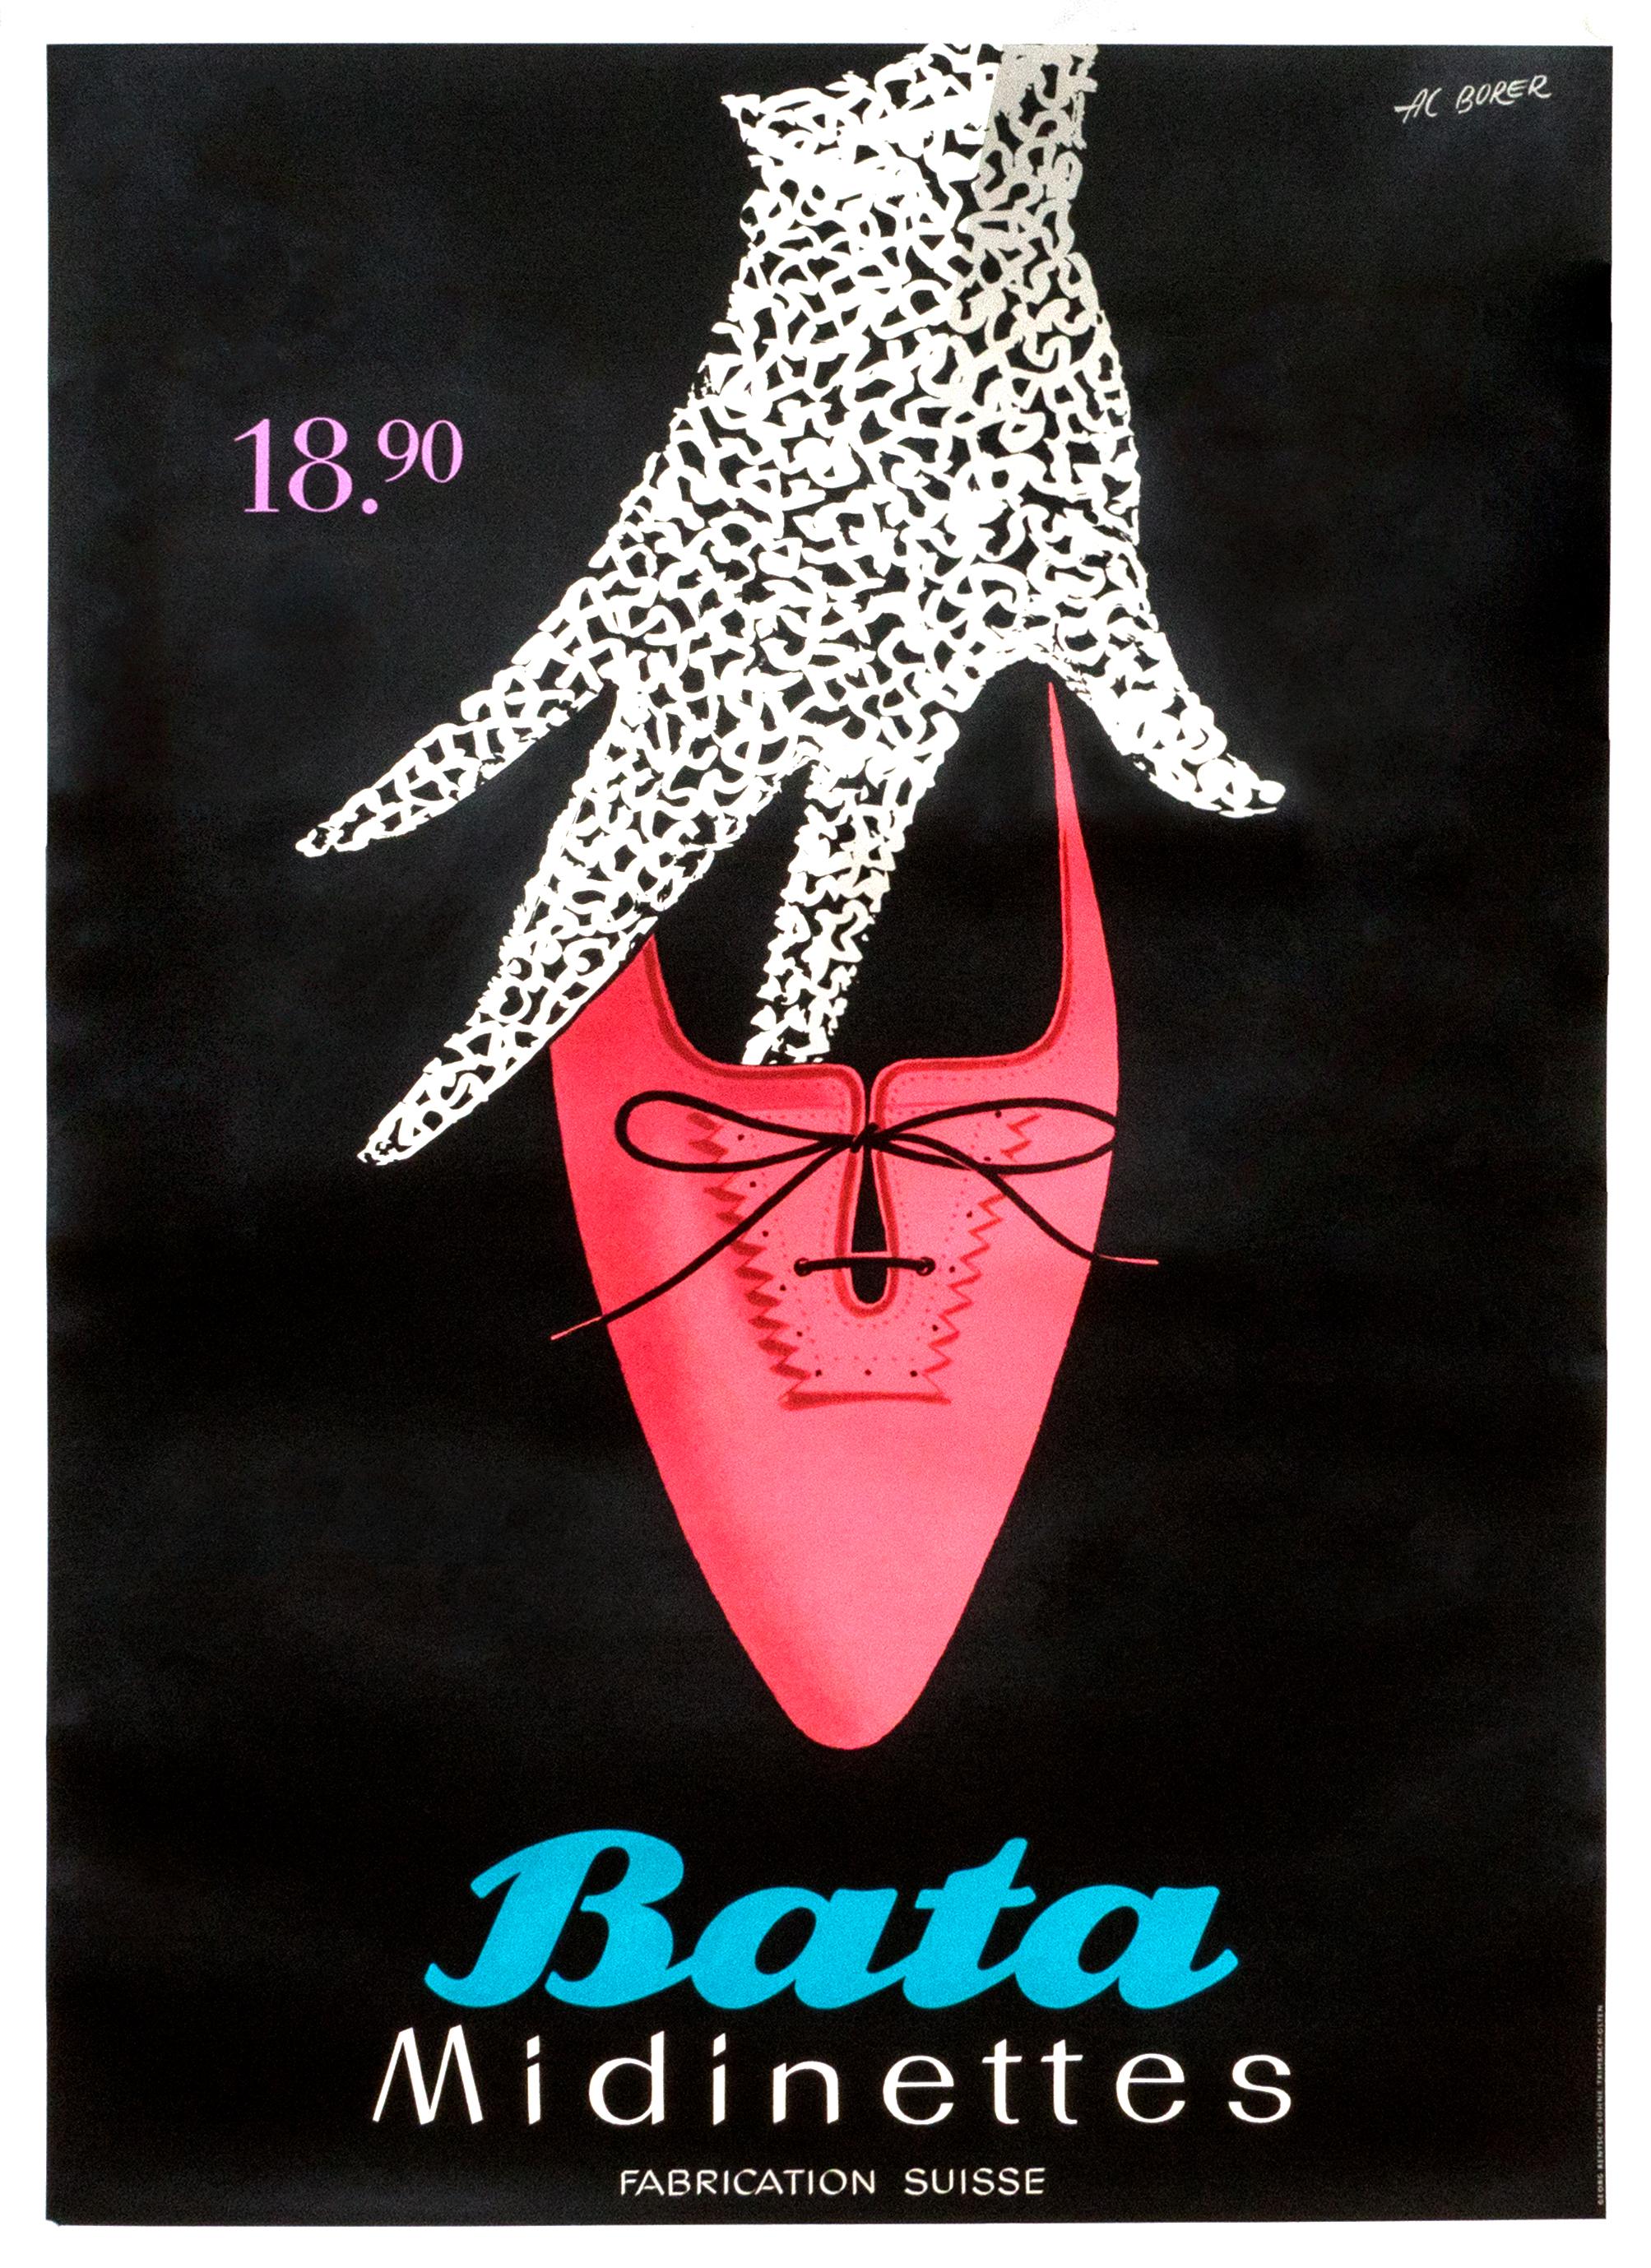 "Bata Midinettes" Original Vintage Sexy Shoe Poster - Print by Albert Borer